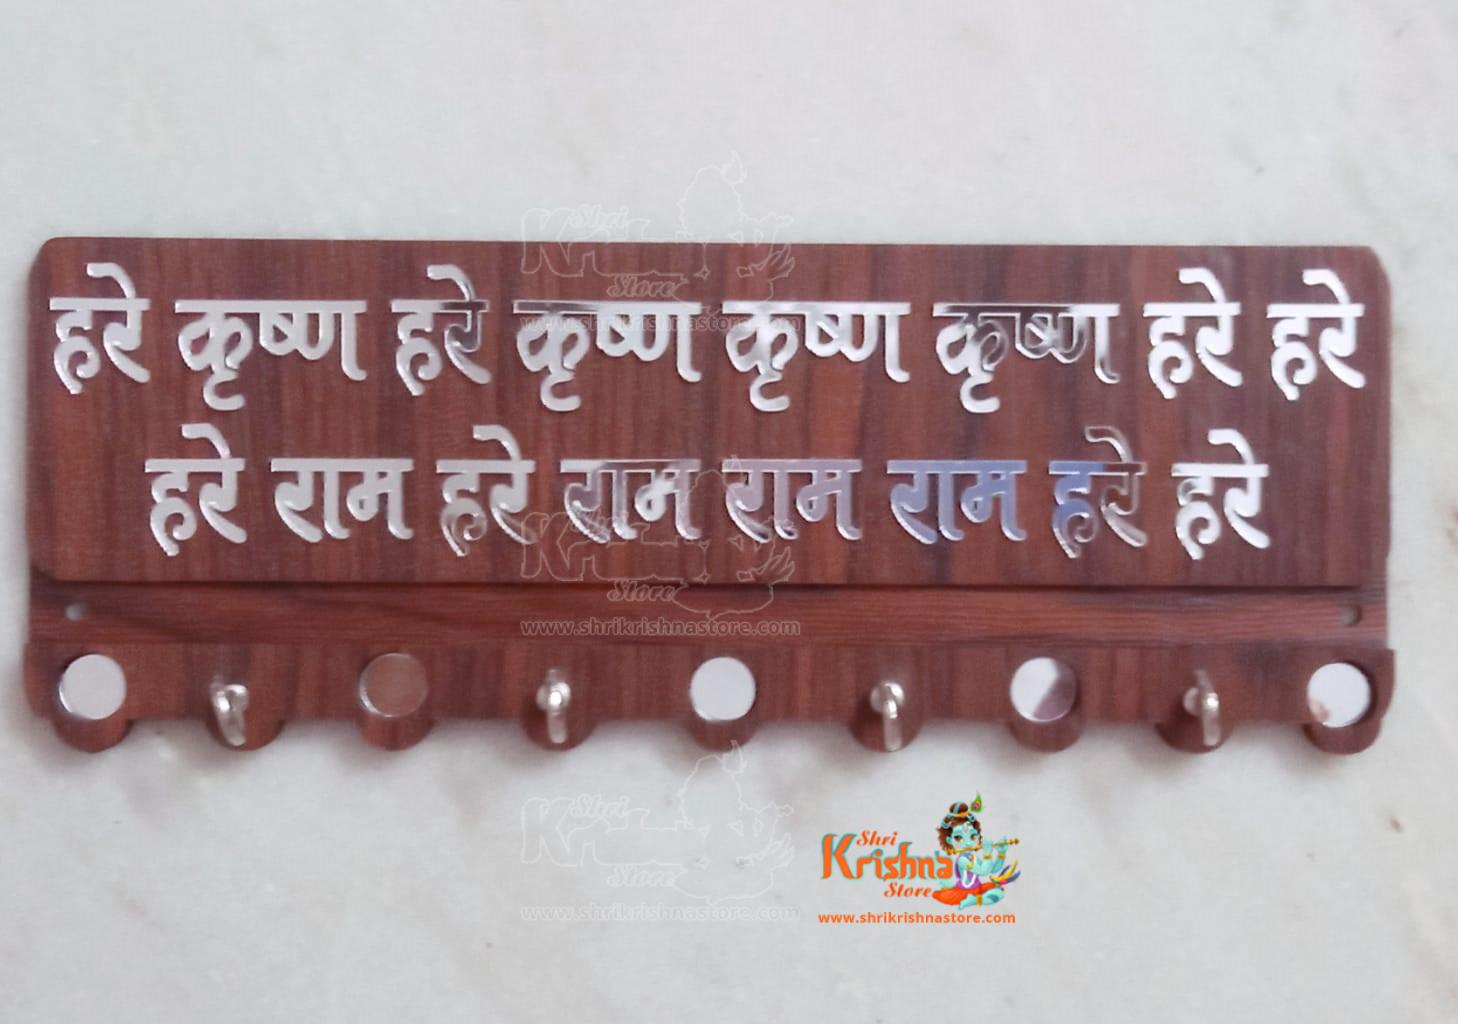 Hare Krishna Key Chain Holder